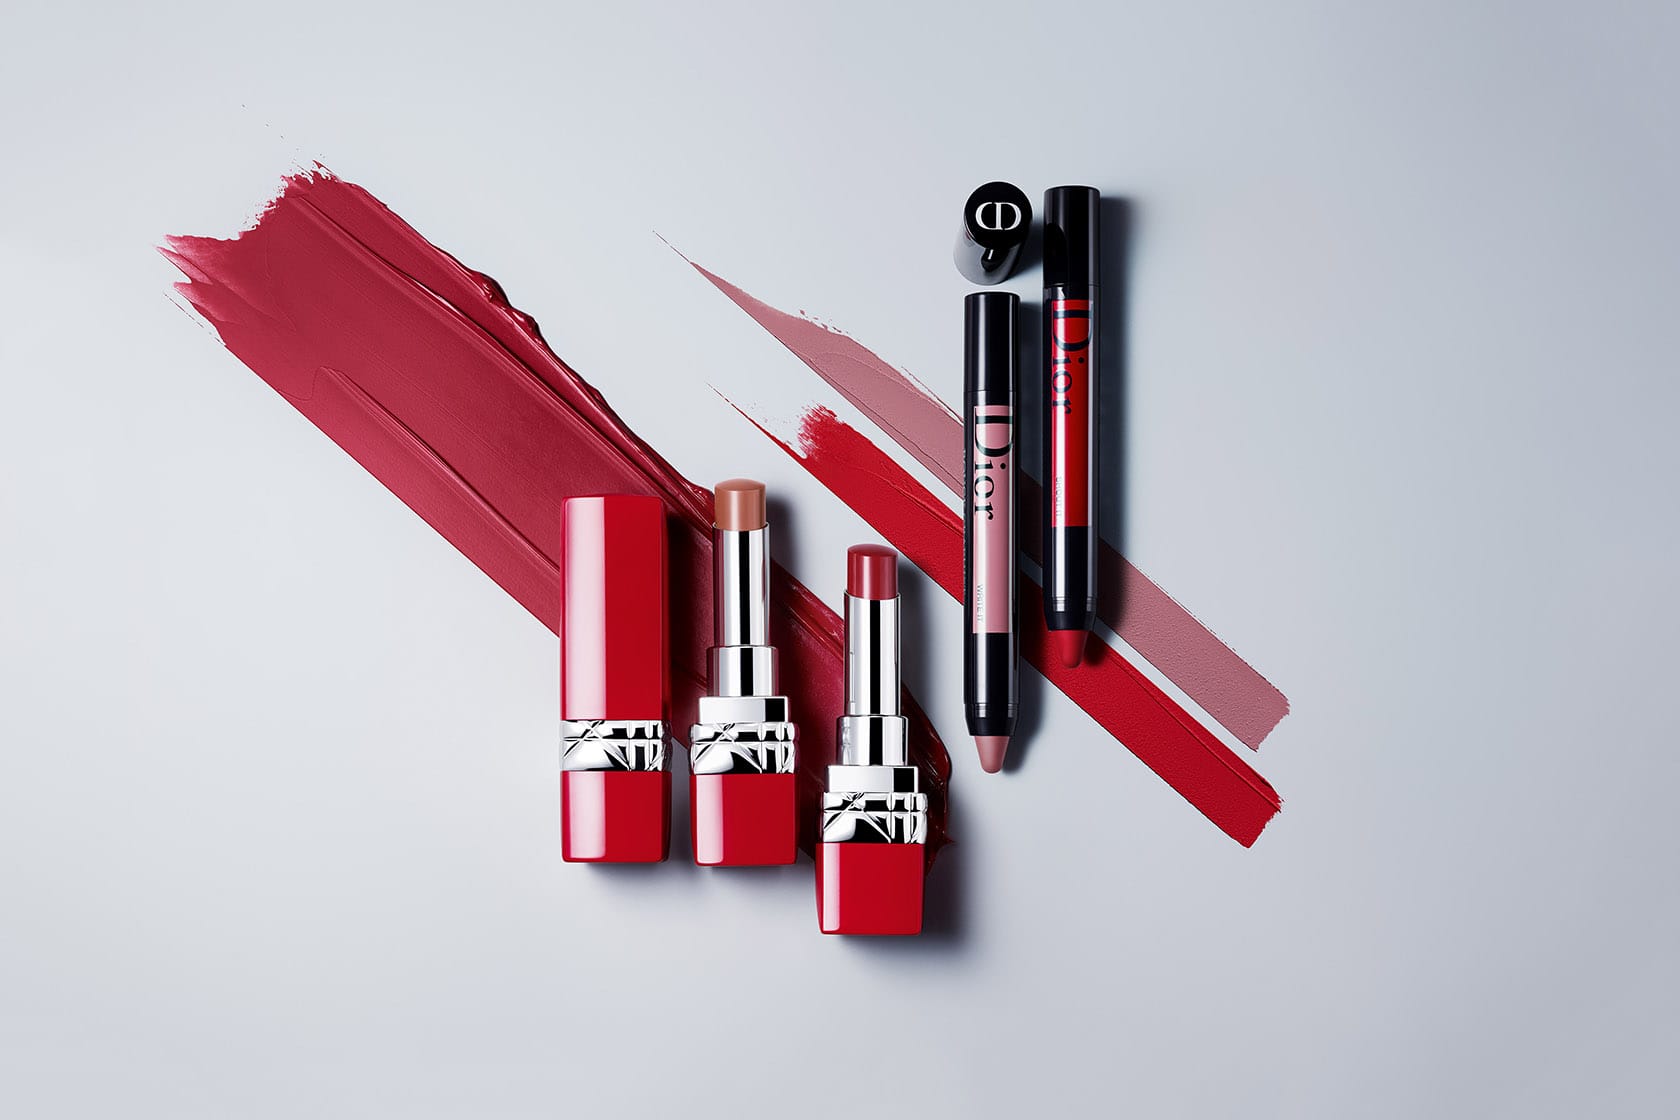 dior 2019 lipstick